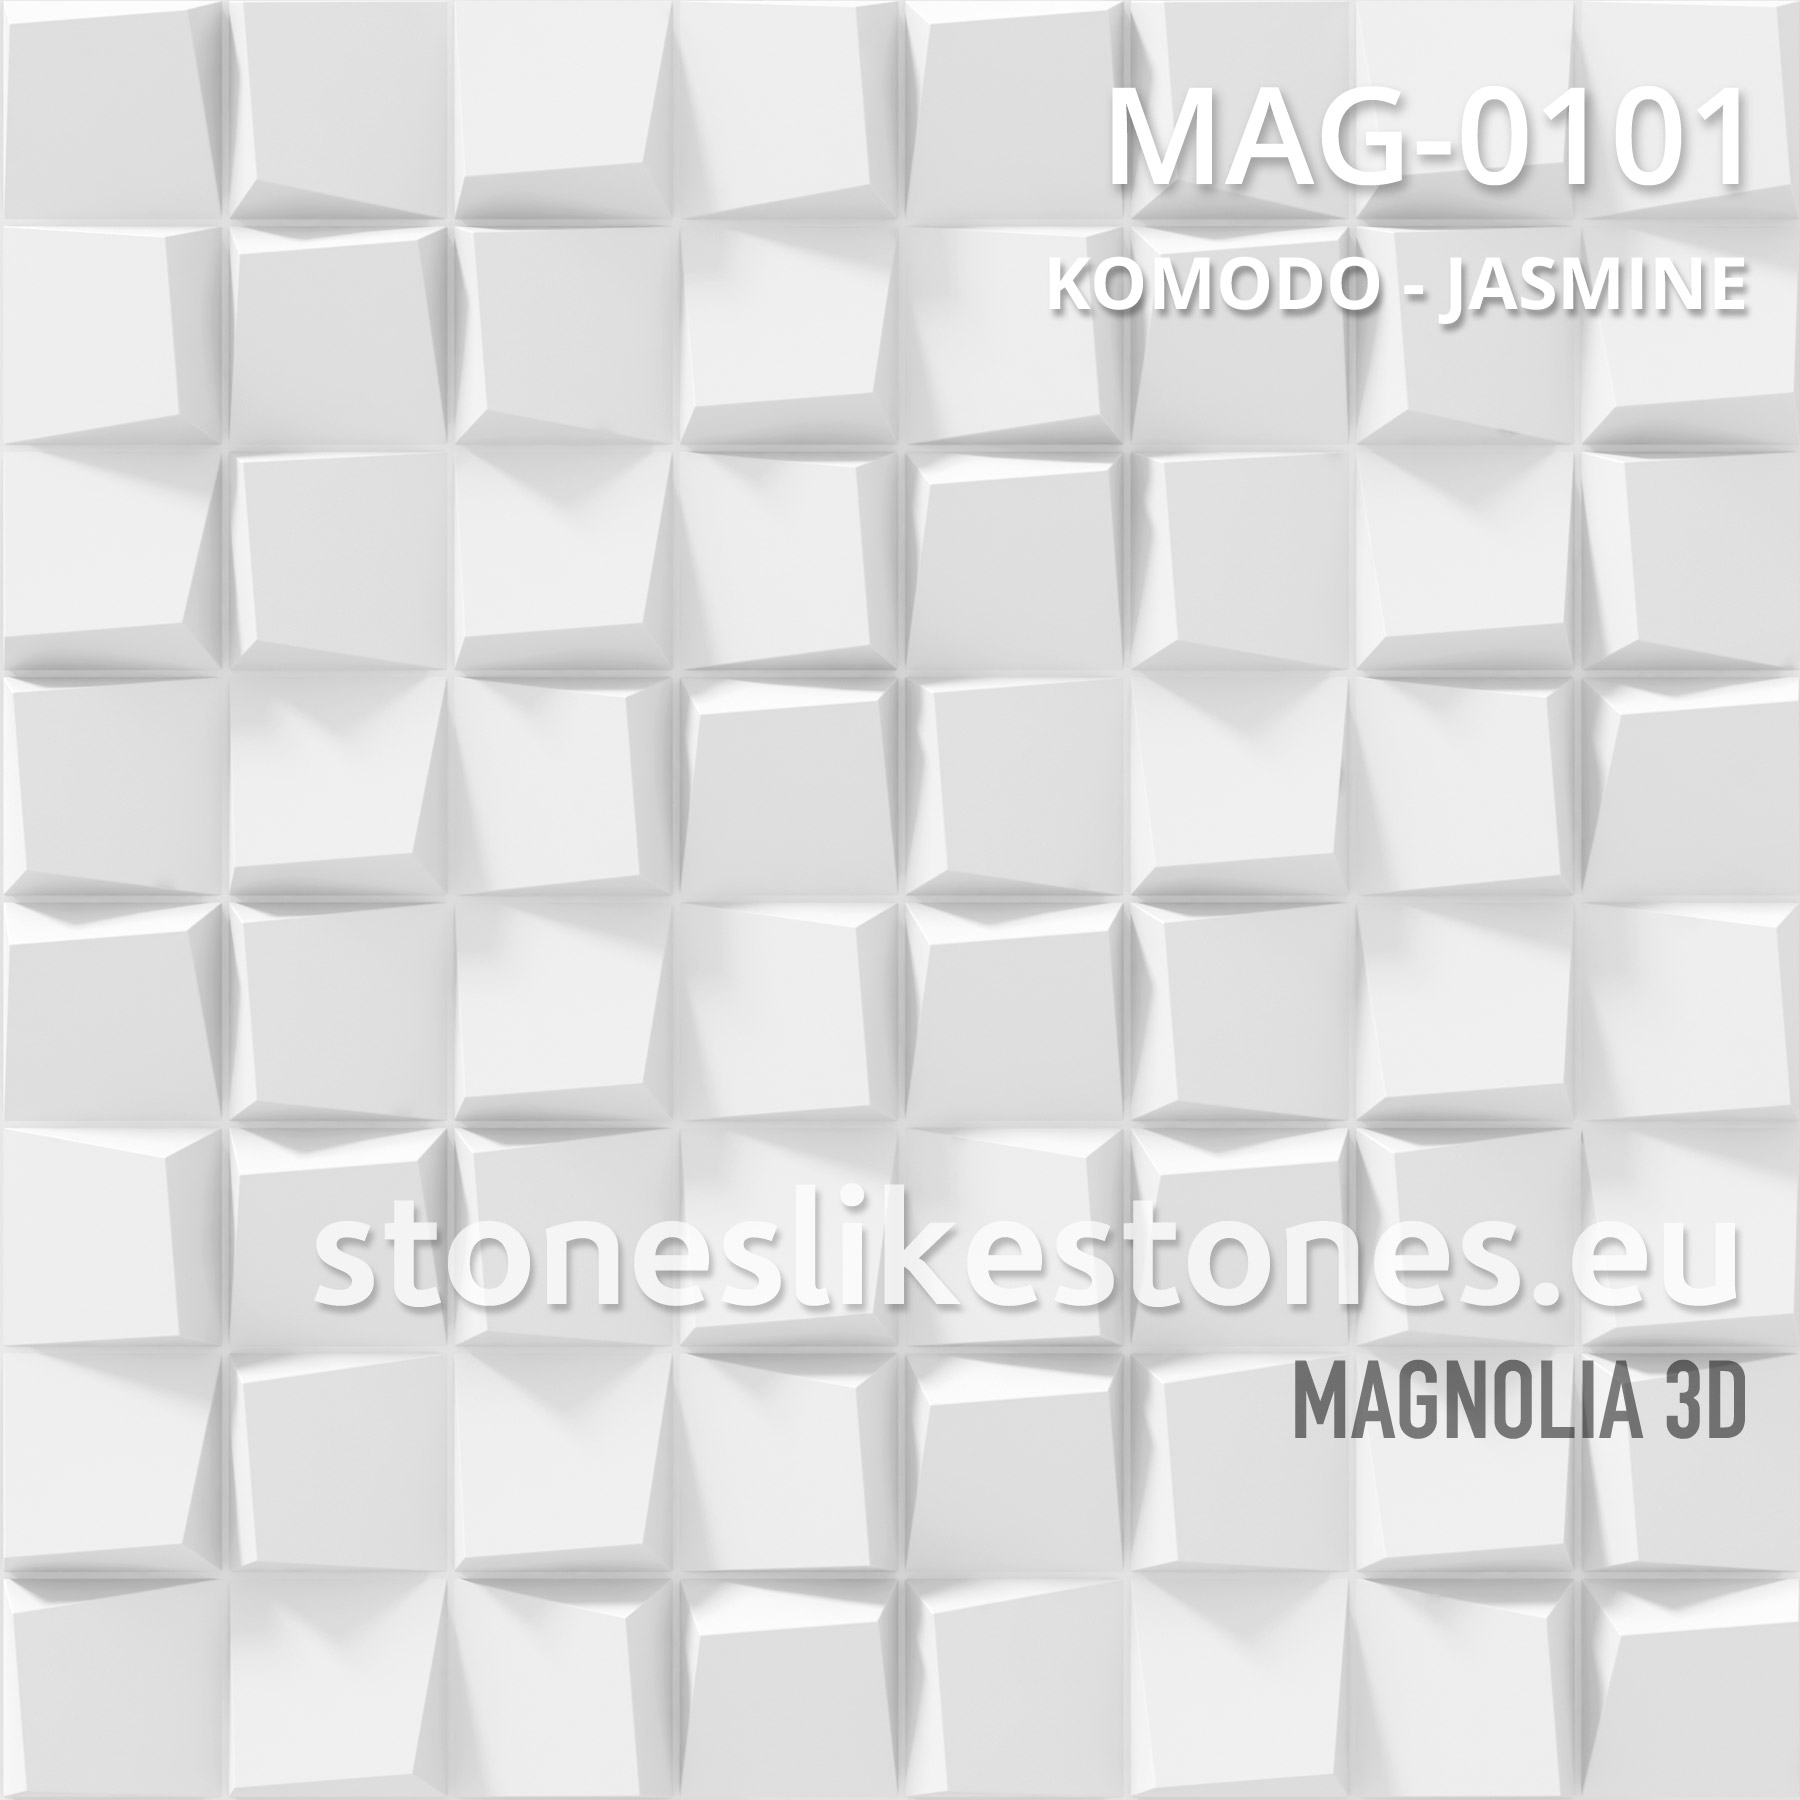 Magnolia 3D – MAG-0101 KOMODO – JASMINE